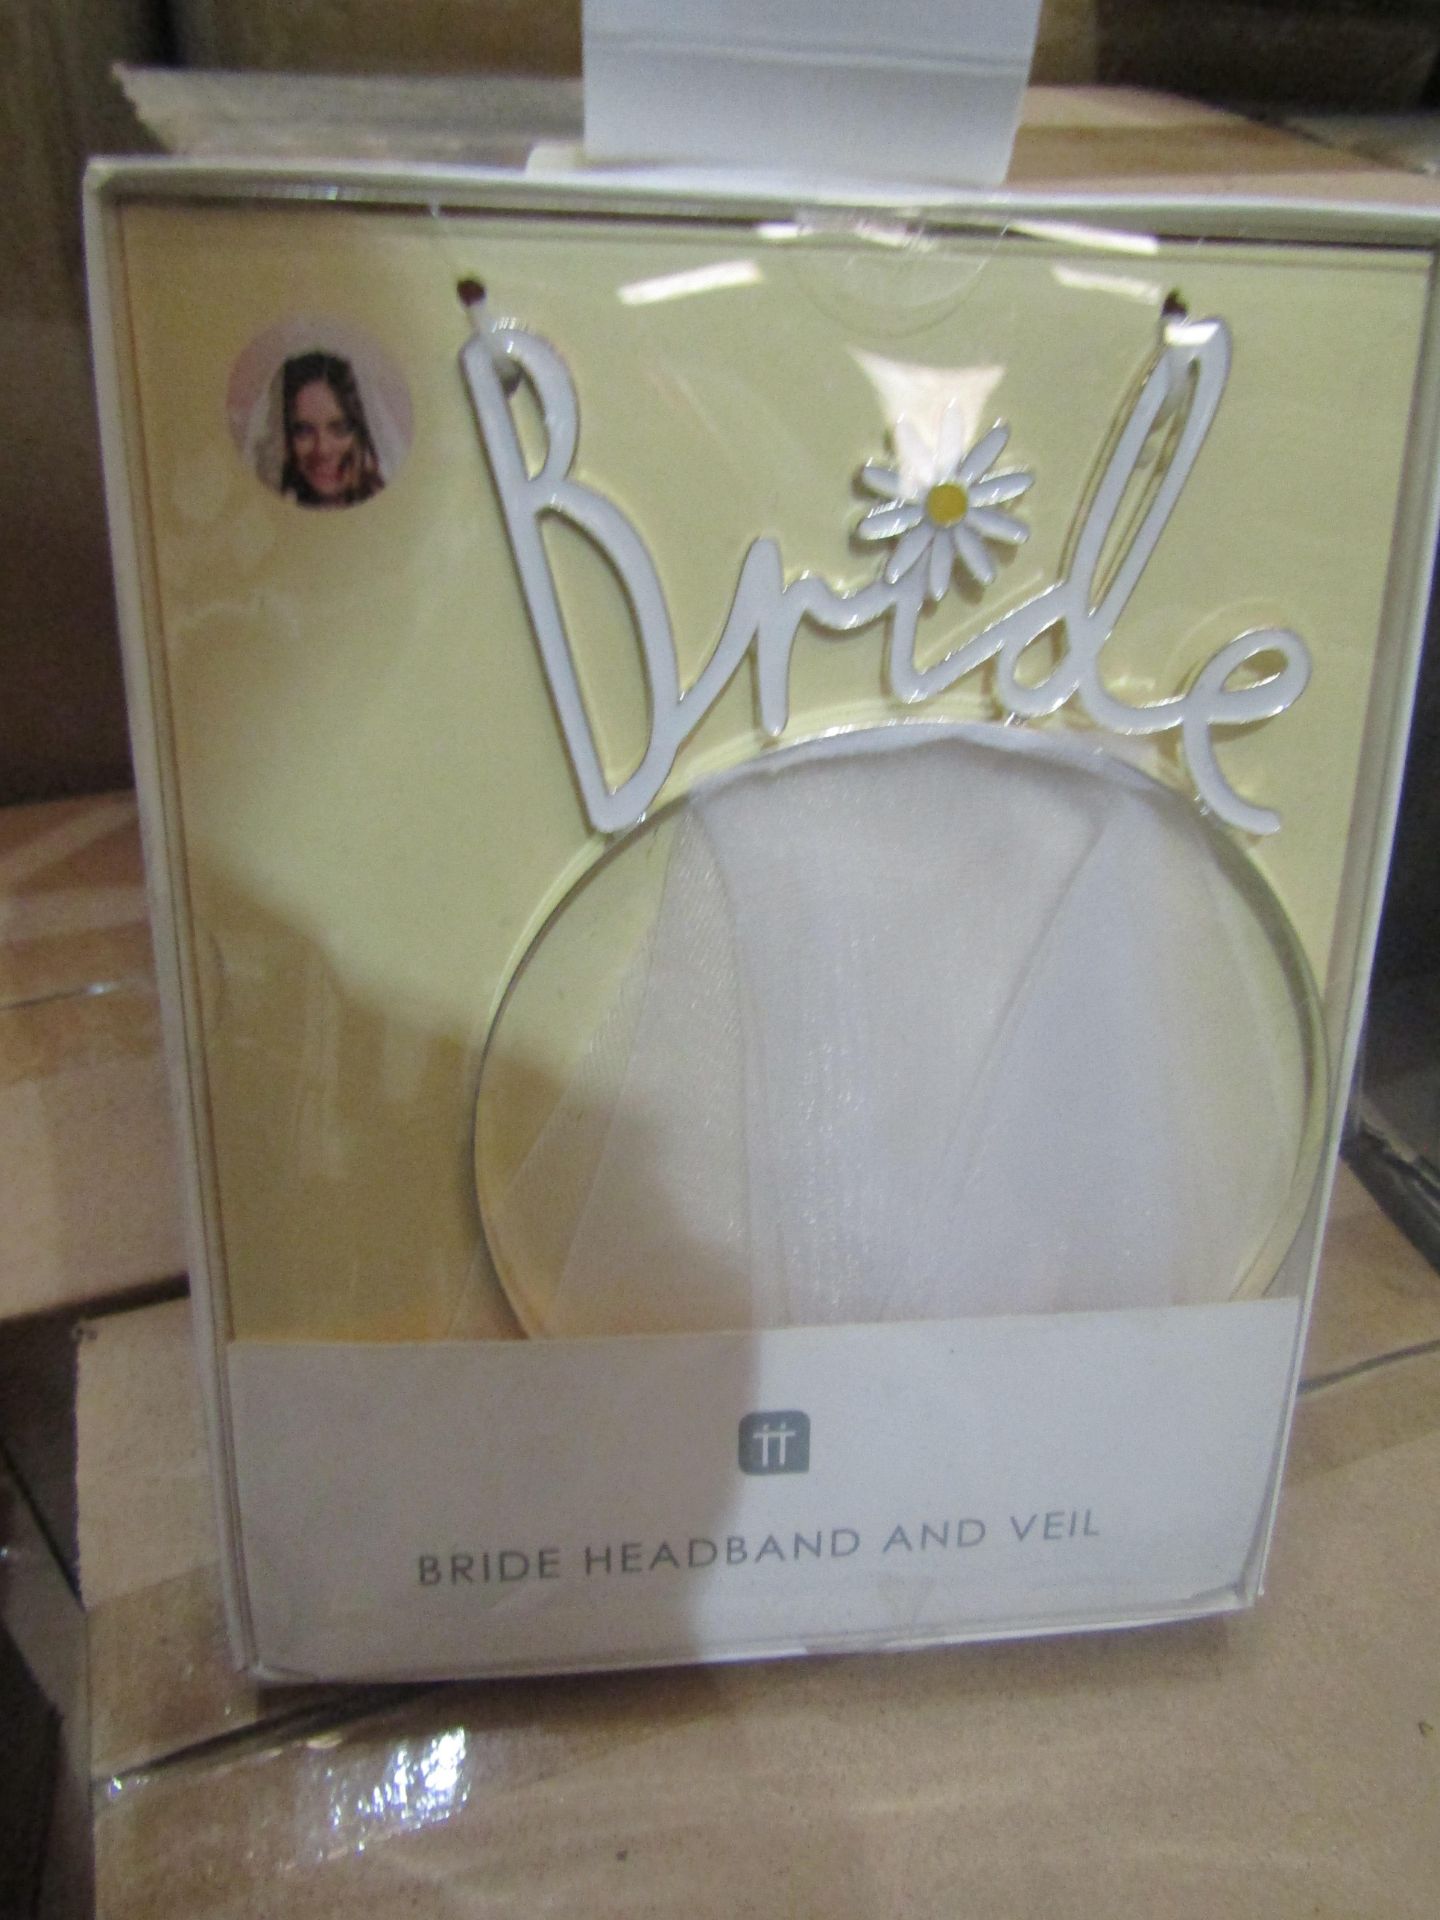 48x Bride Headband And Veil, New & Boxed.